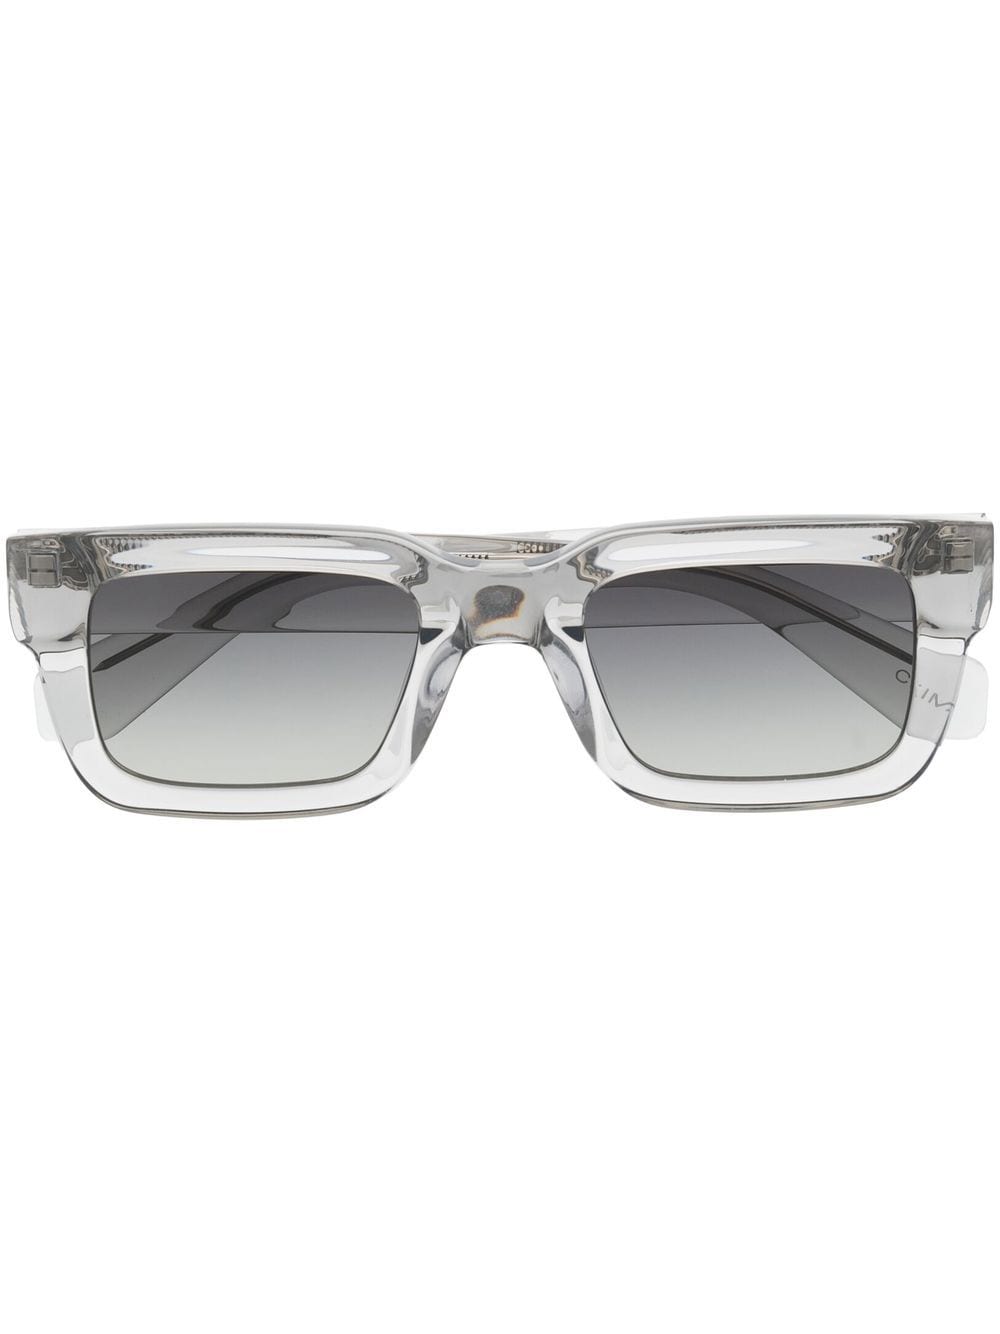 05 rectangle-frame sunglasses